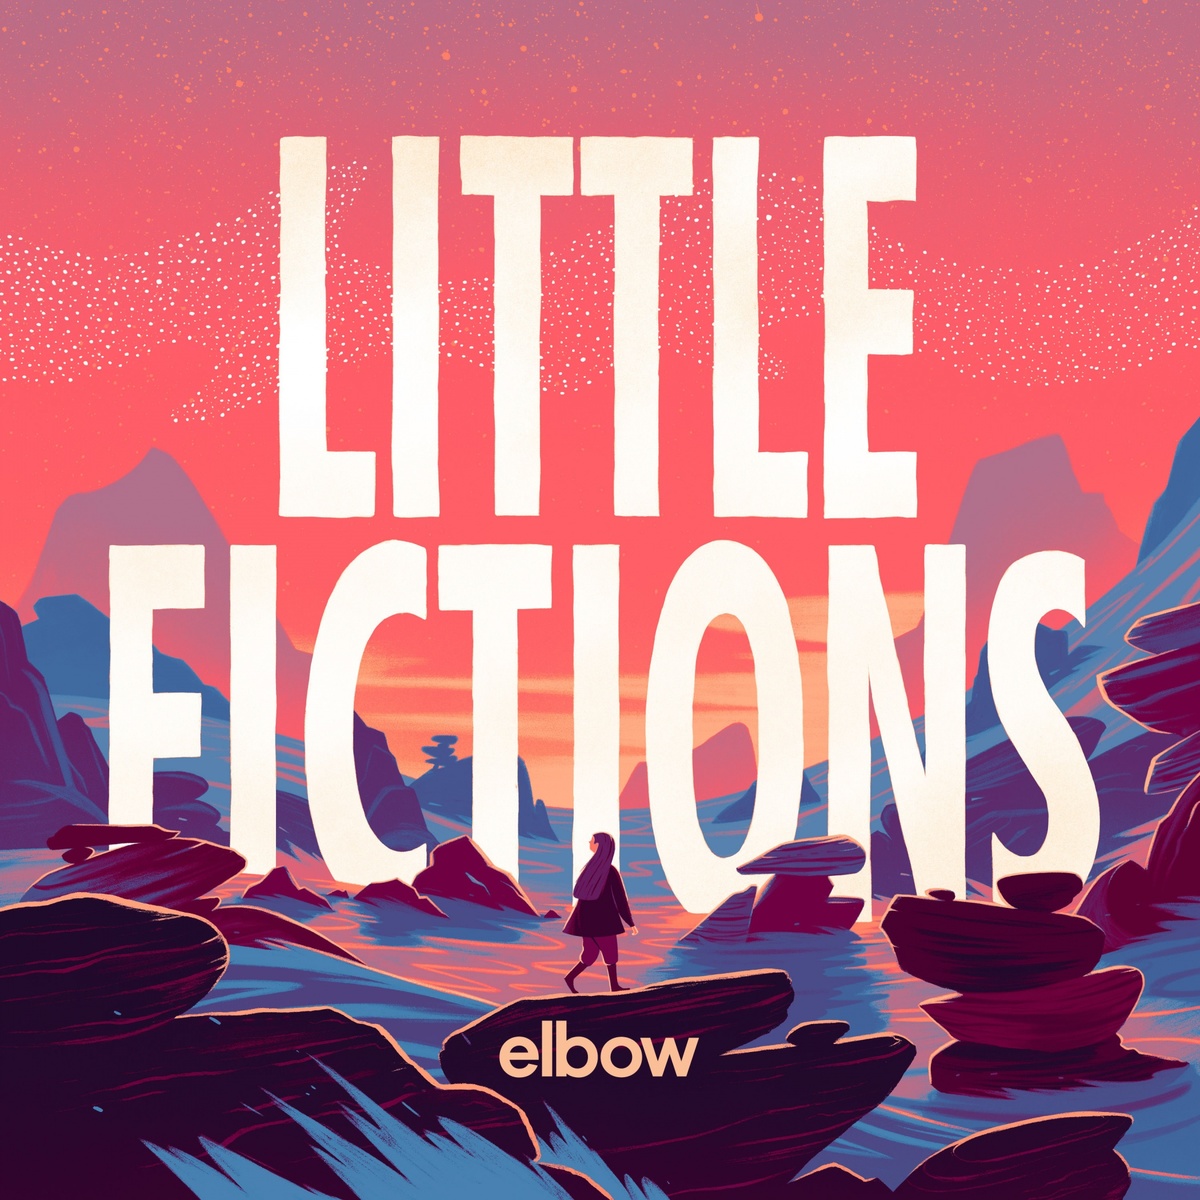 Elbow "Little Fictions"